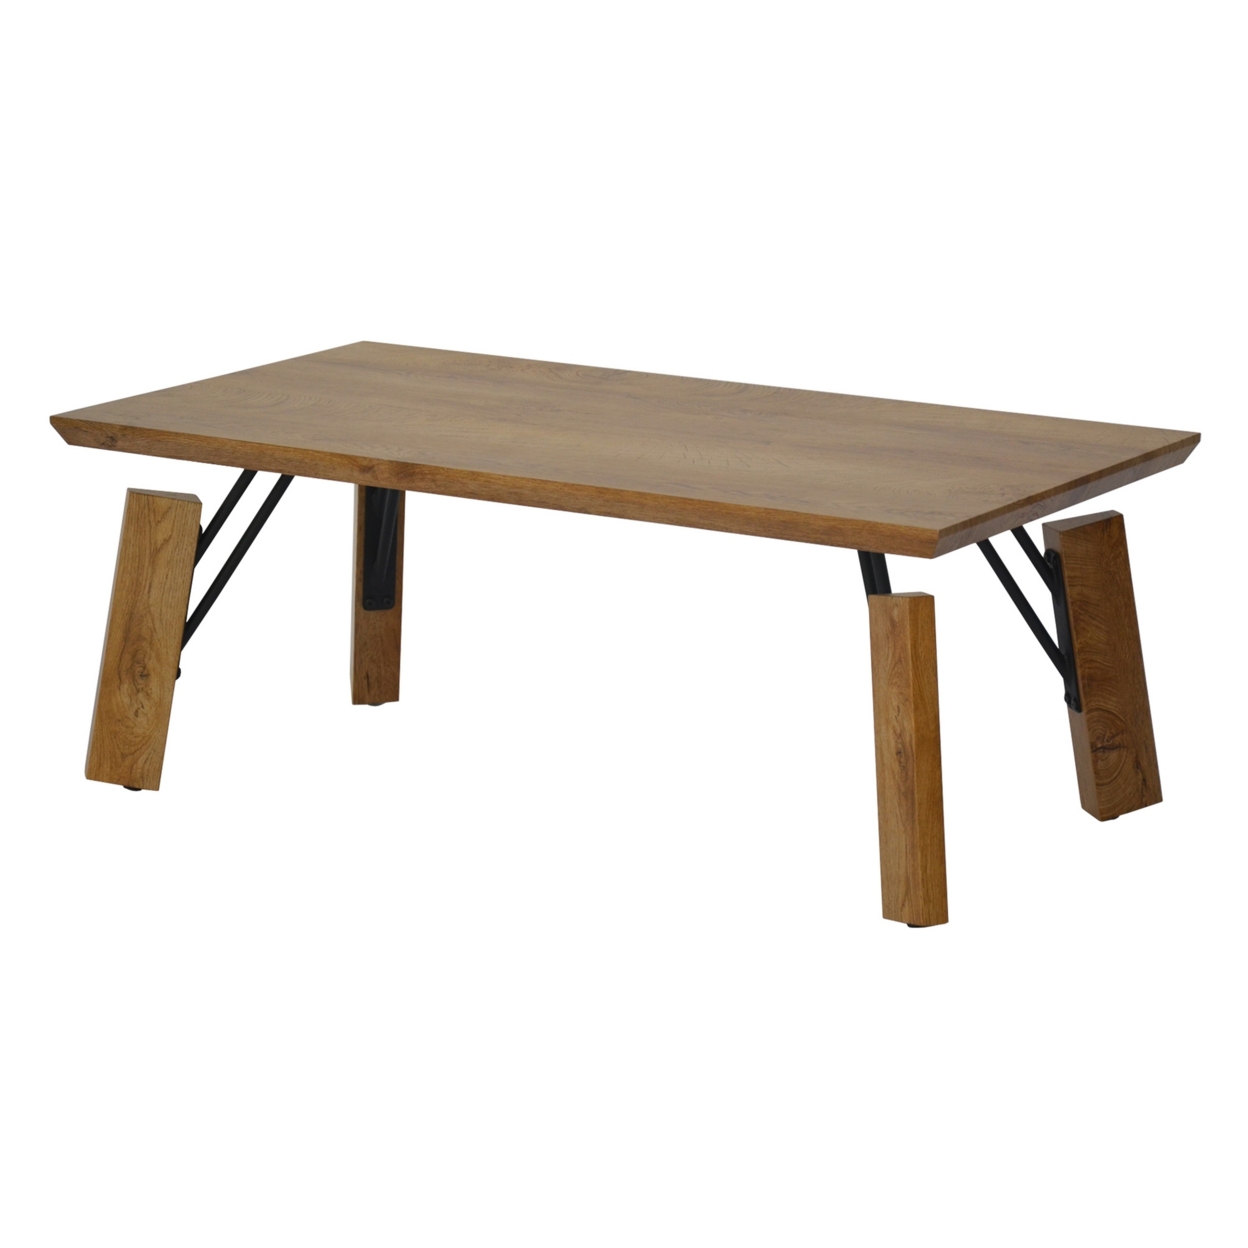 Rectangular Wooden Coffee Table With Block Legs, Natural Brown- Saltoro Sherpi